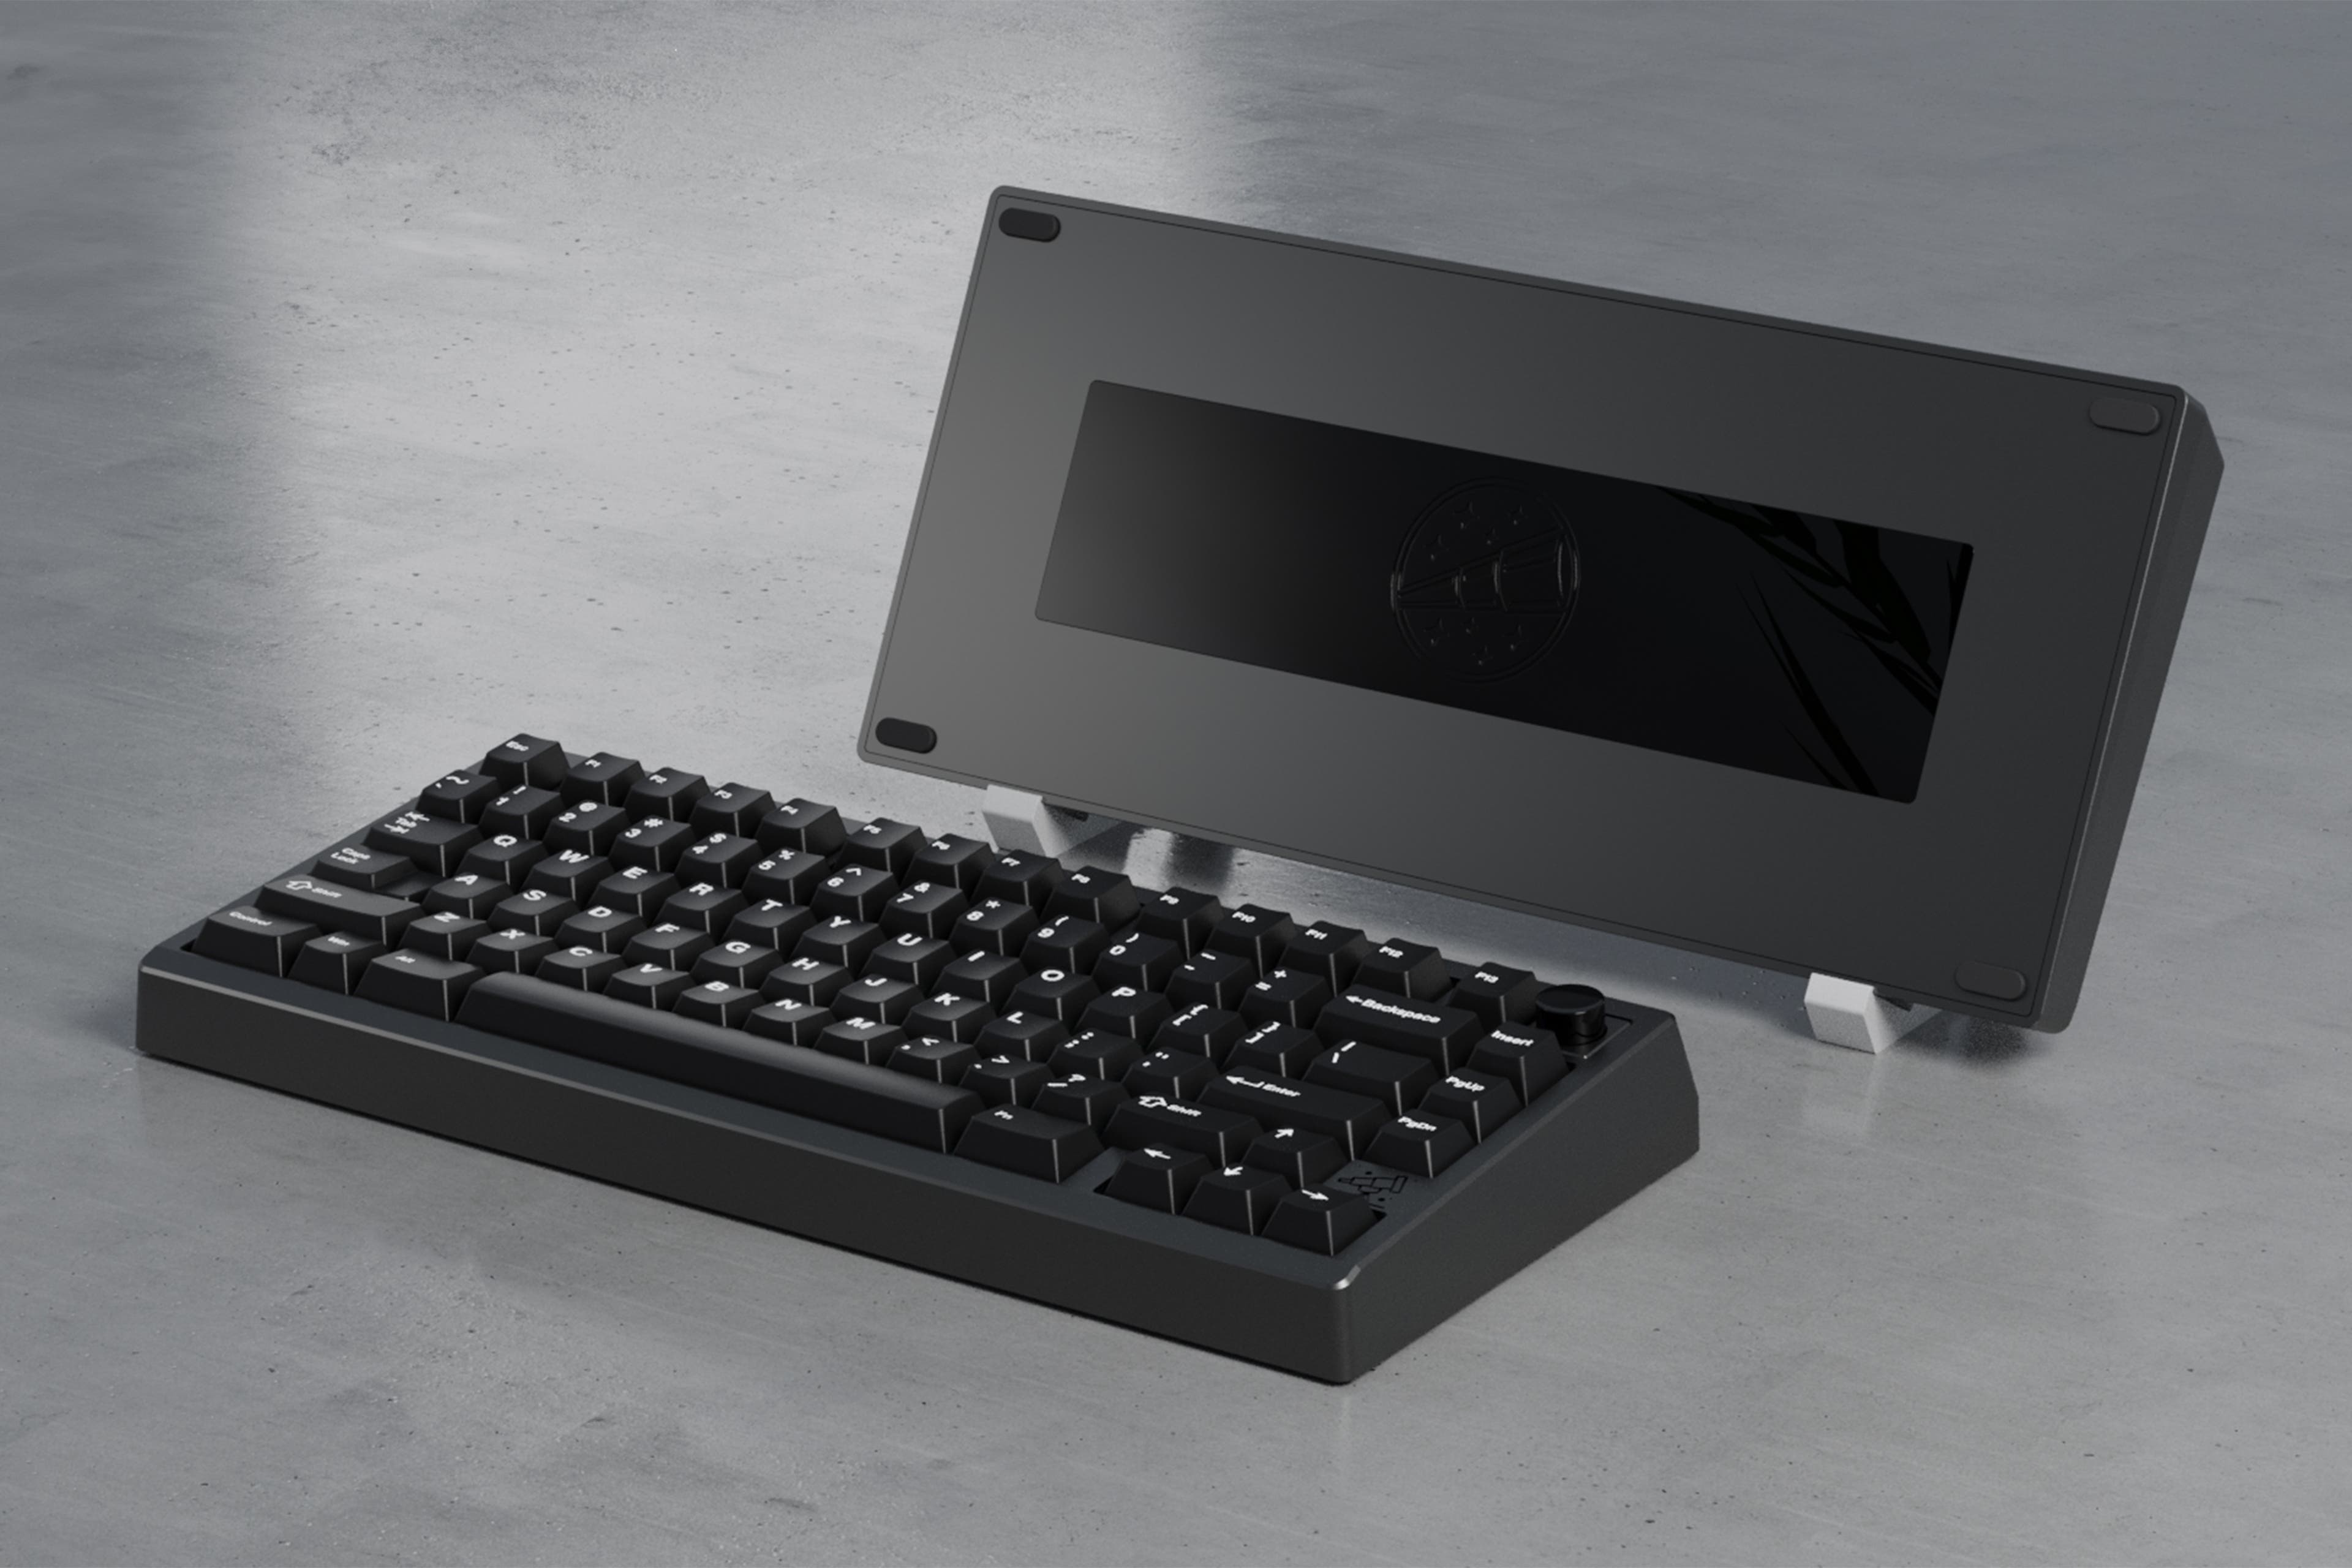 [Group-Buy] Meletrix Zoom75 Special Edition Space Gray - Barebones Keyboard Kit [November Batch] Tri-Mode Flex Cut PCB